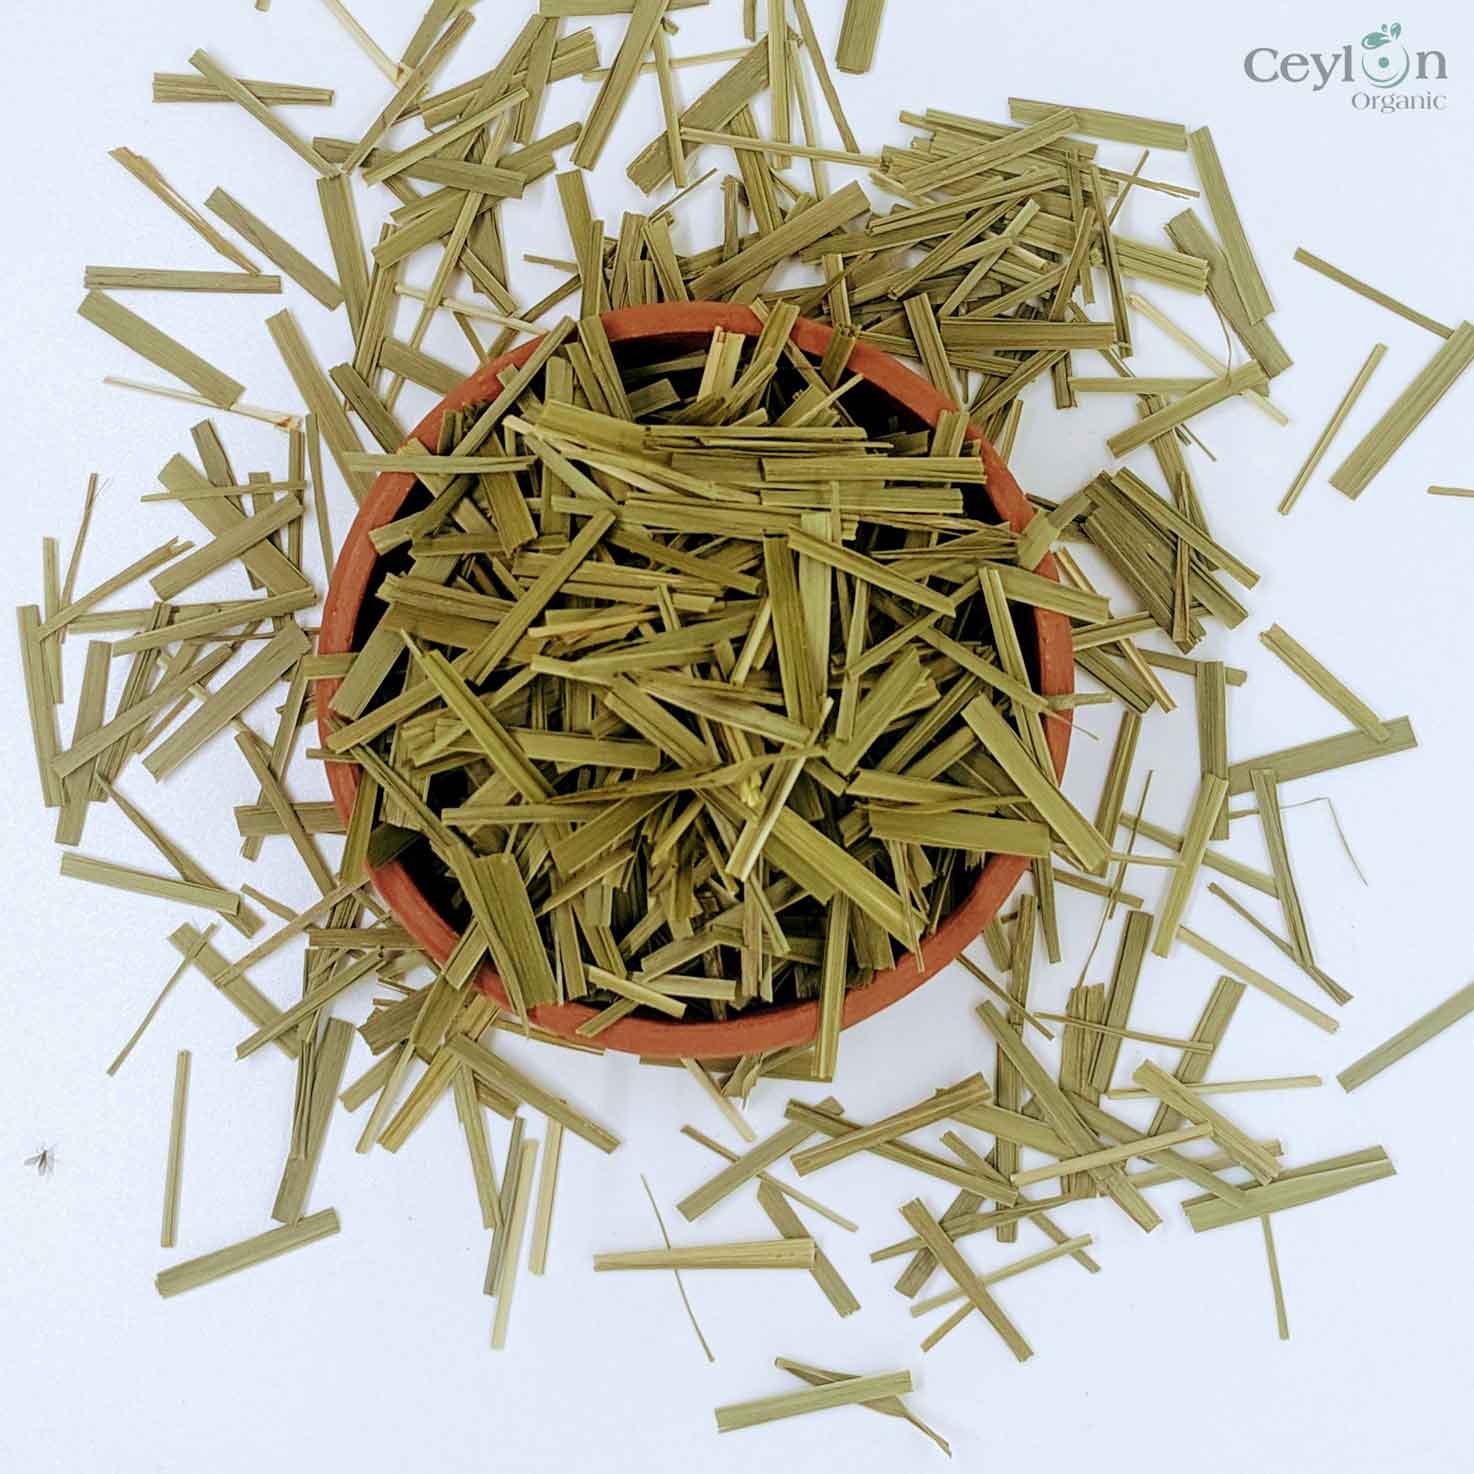 200g+  Dried Lemongrass 100% Organic | Ceylon organic-7